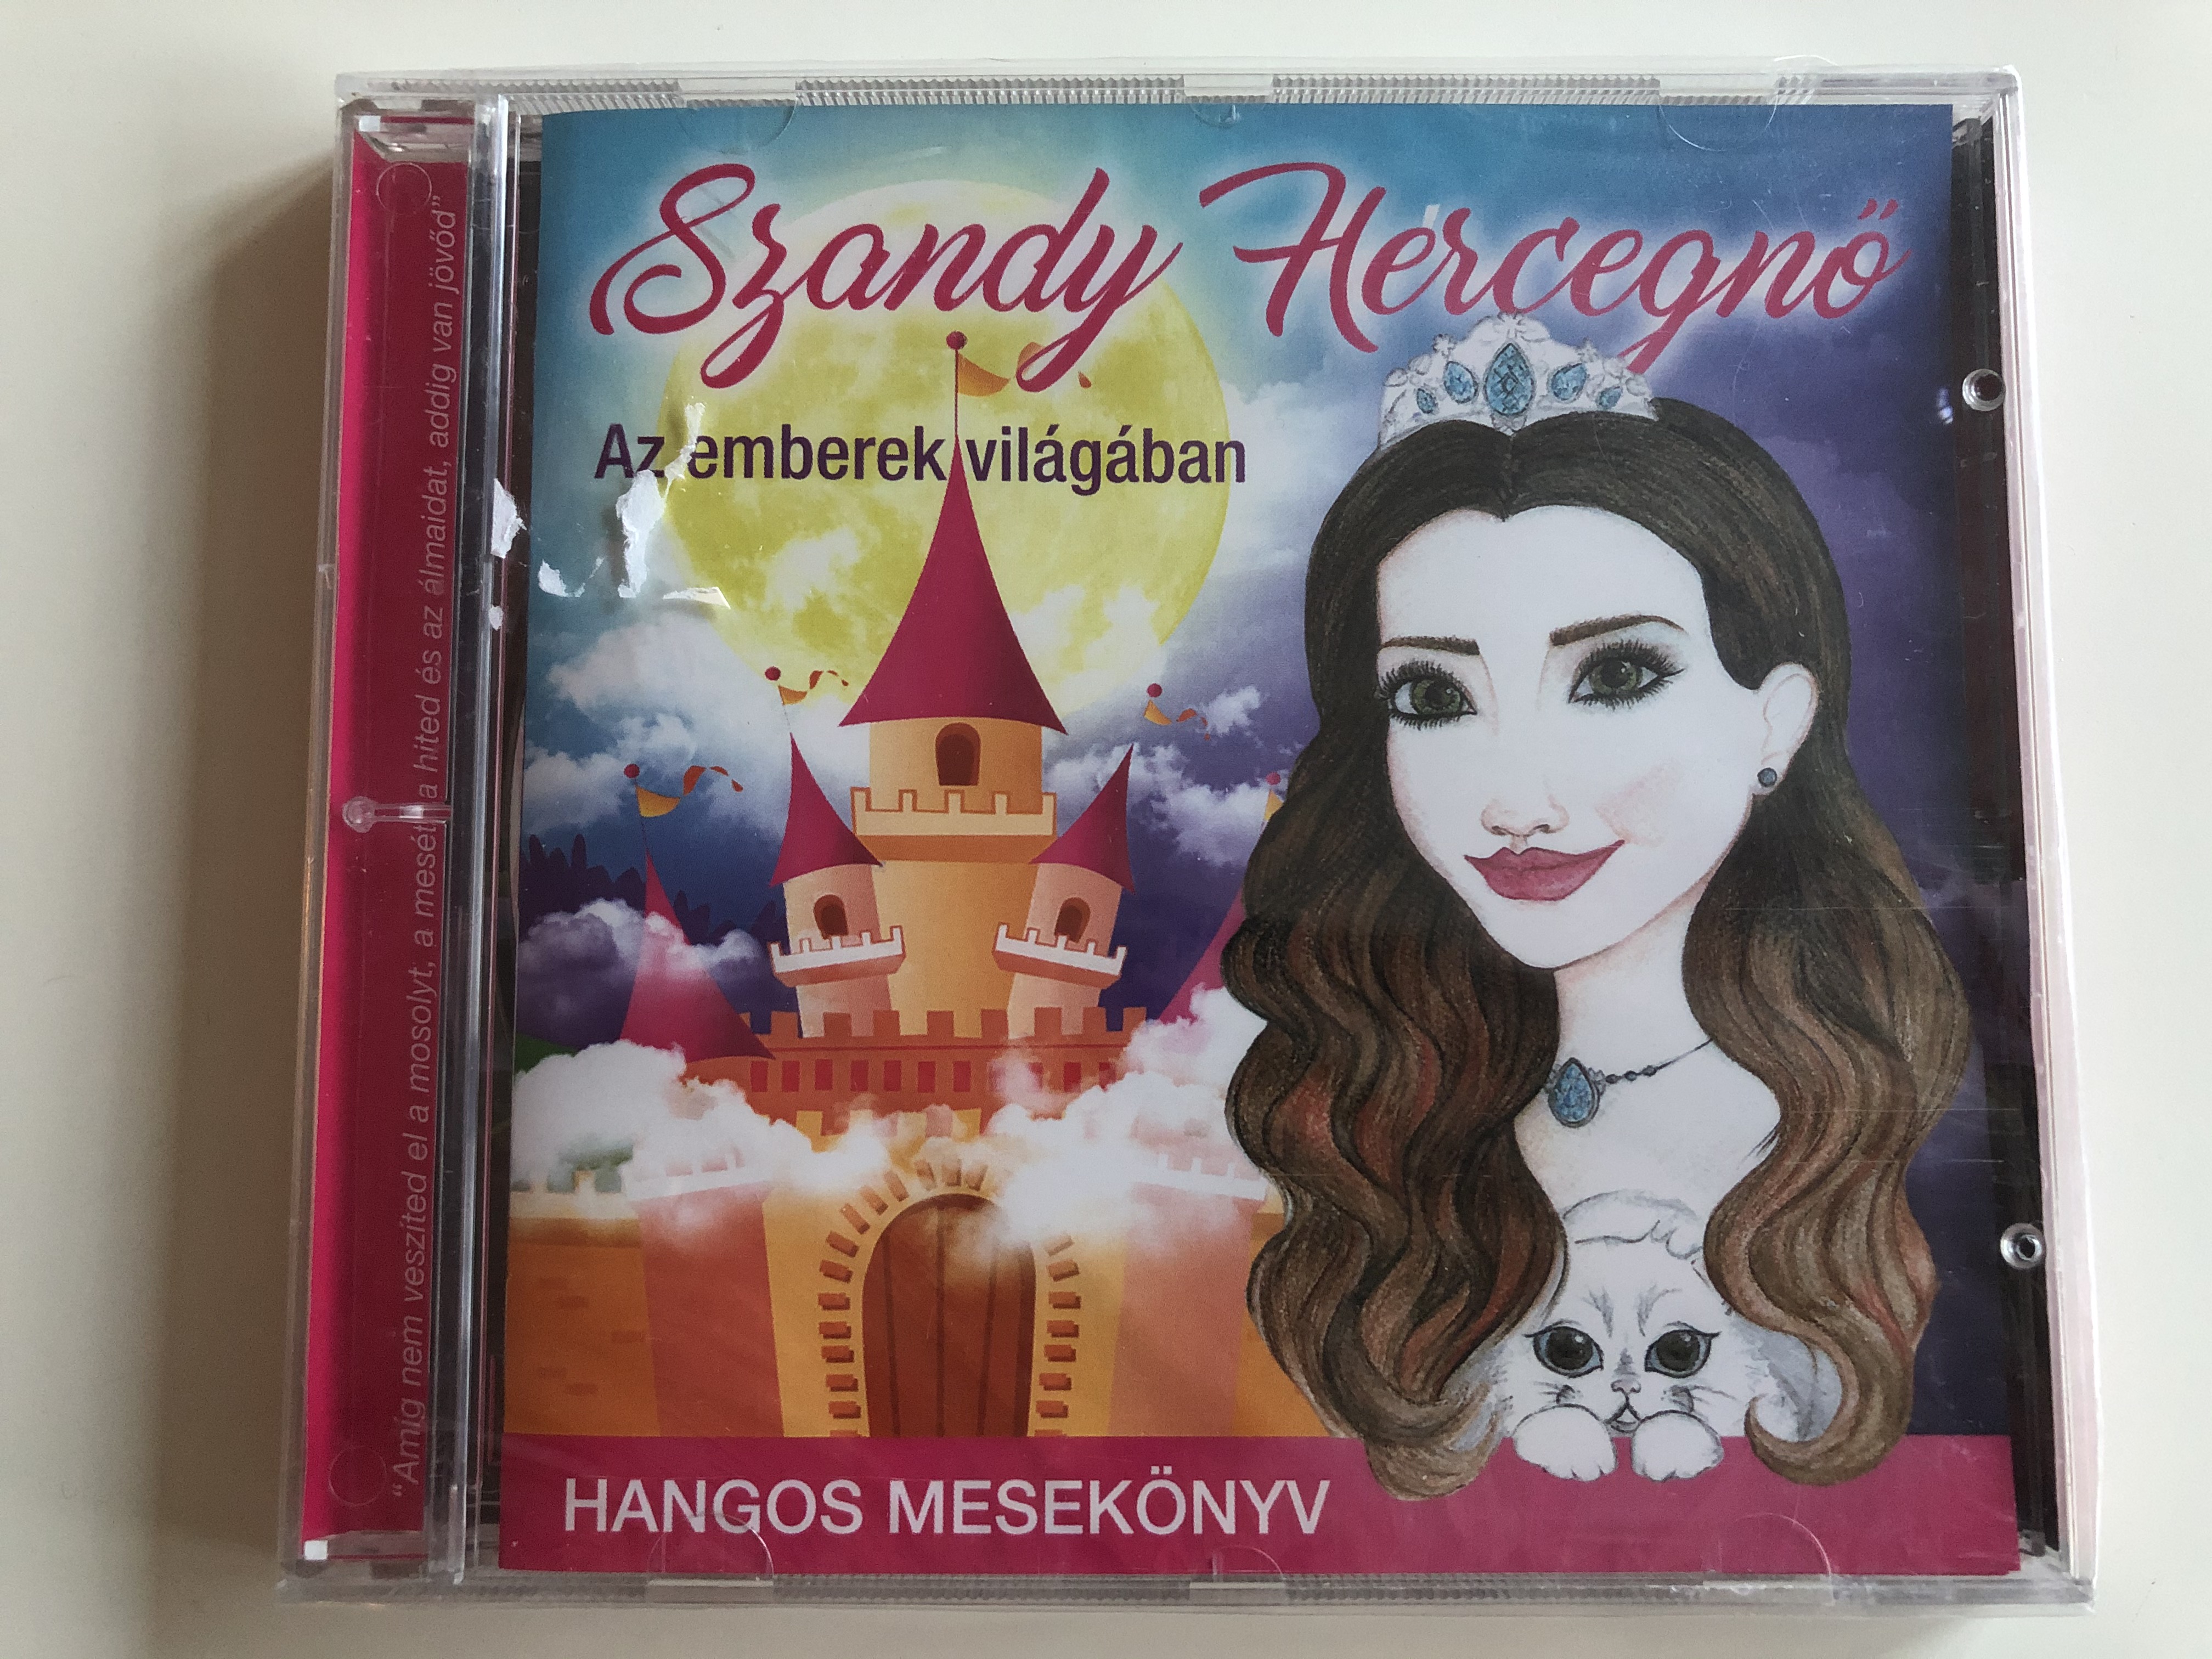 szandy-hercegno-az-emberek-vilagaban-hangos-mesekonyv-frontline-audio-cd-2018-fl051-1-.jpg